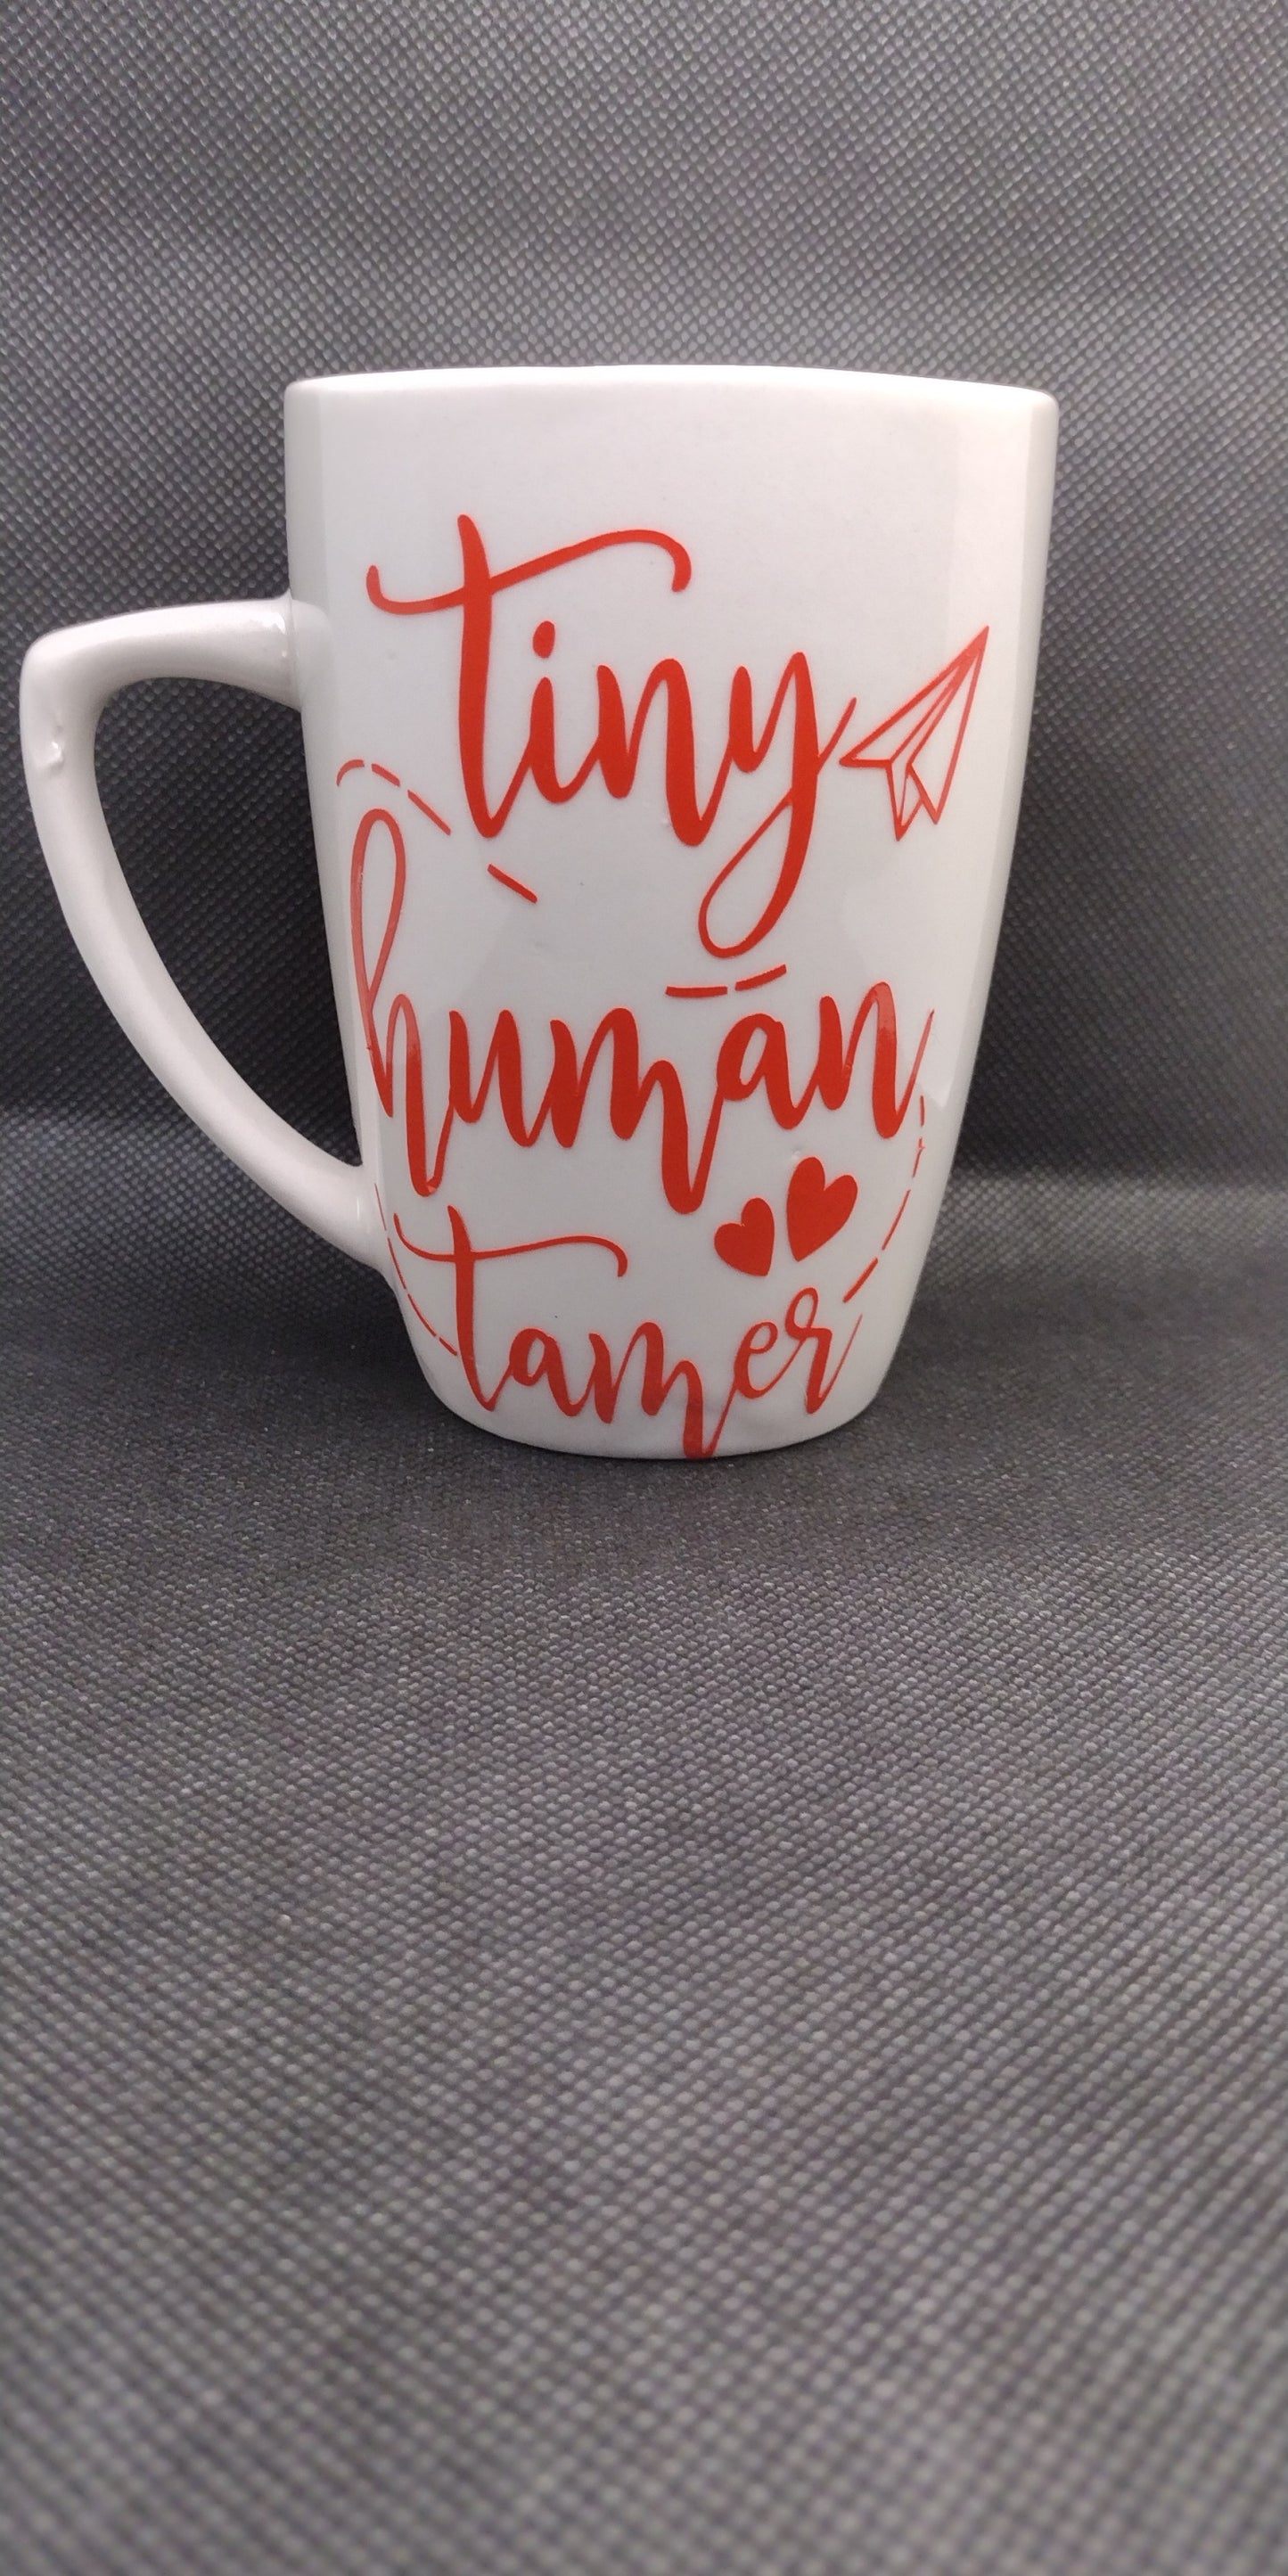 Tiny Human Tamer Ceramic Mug